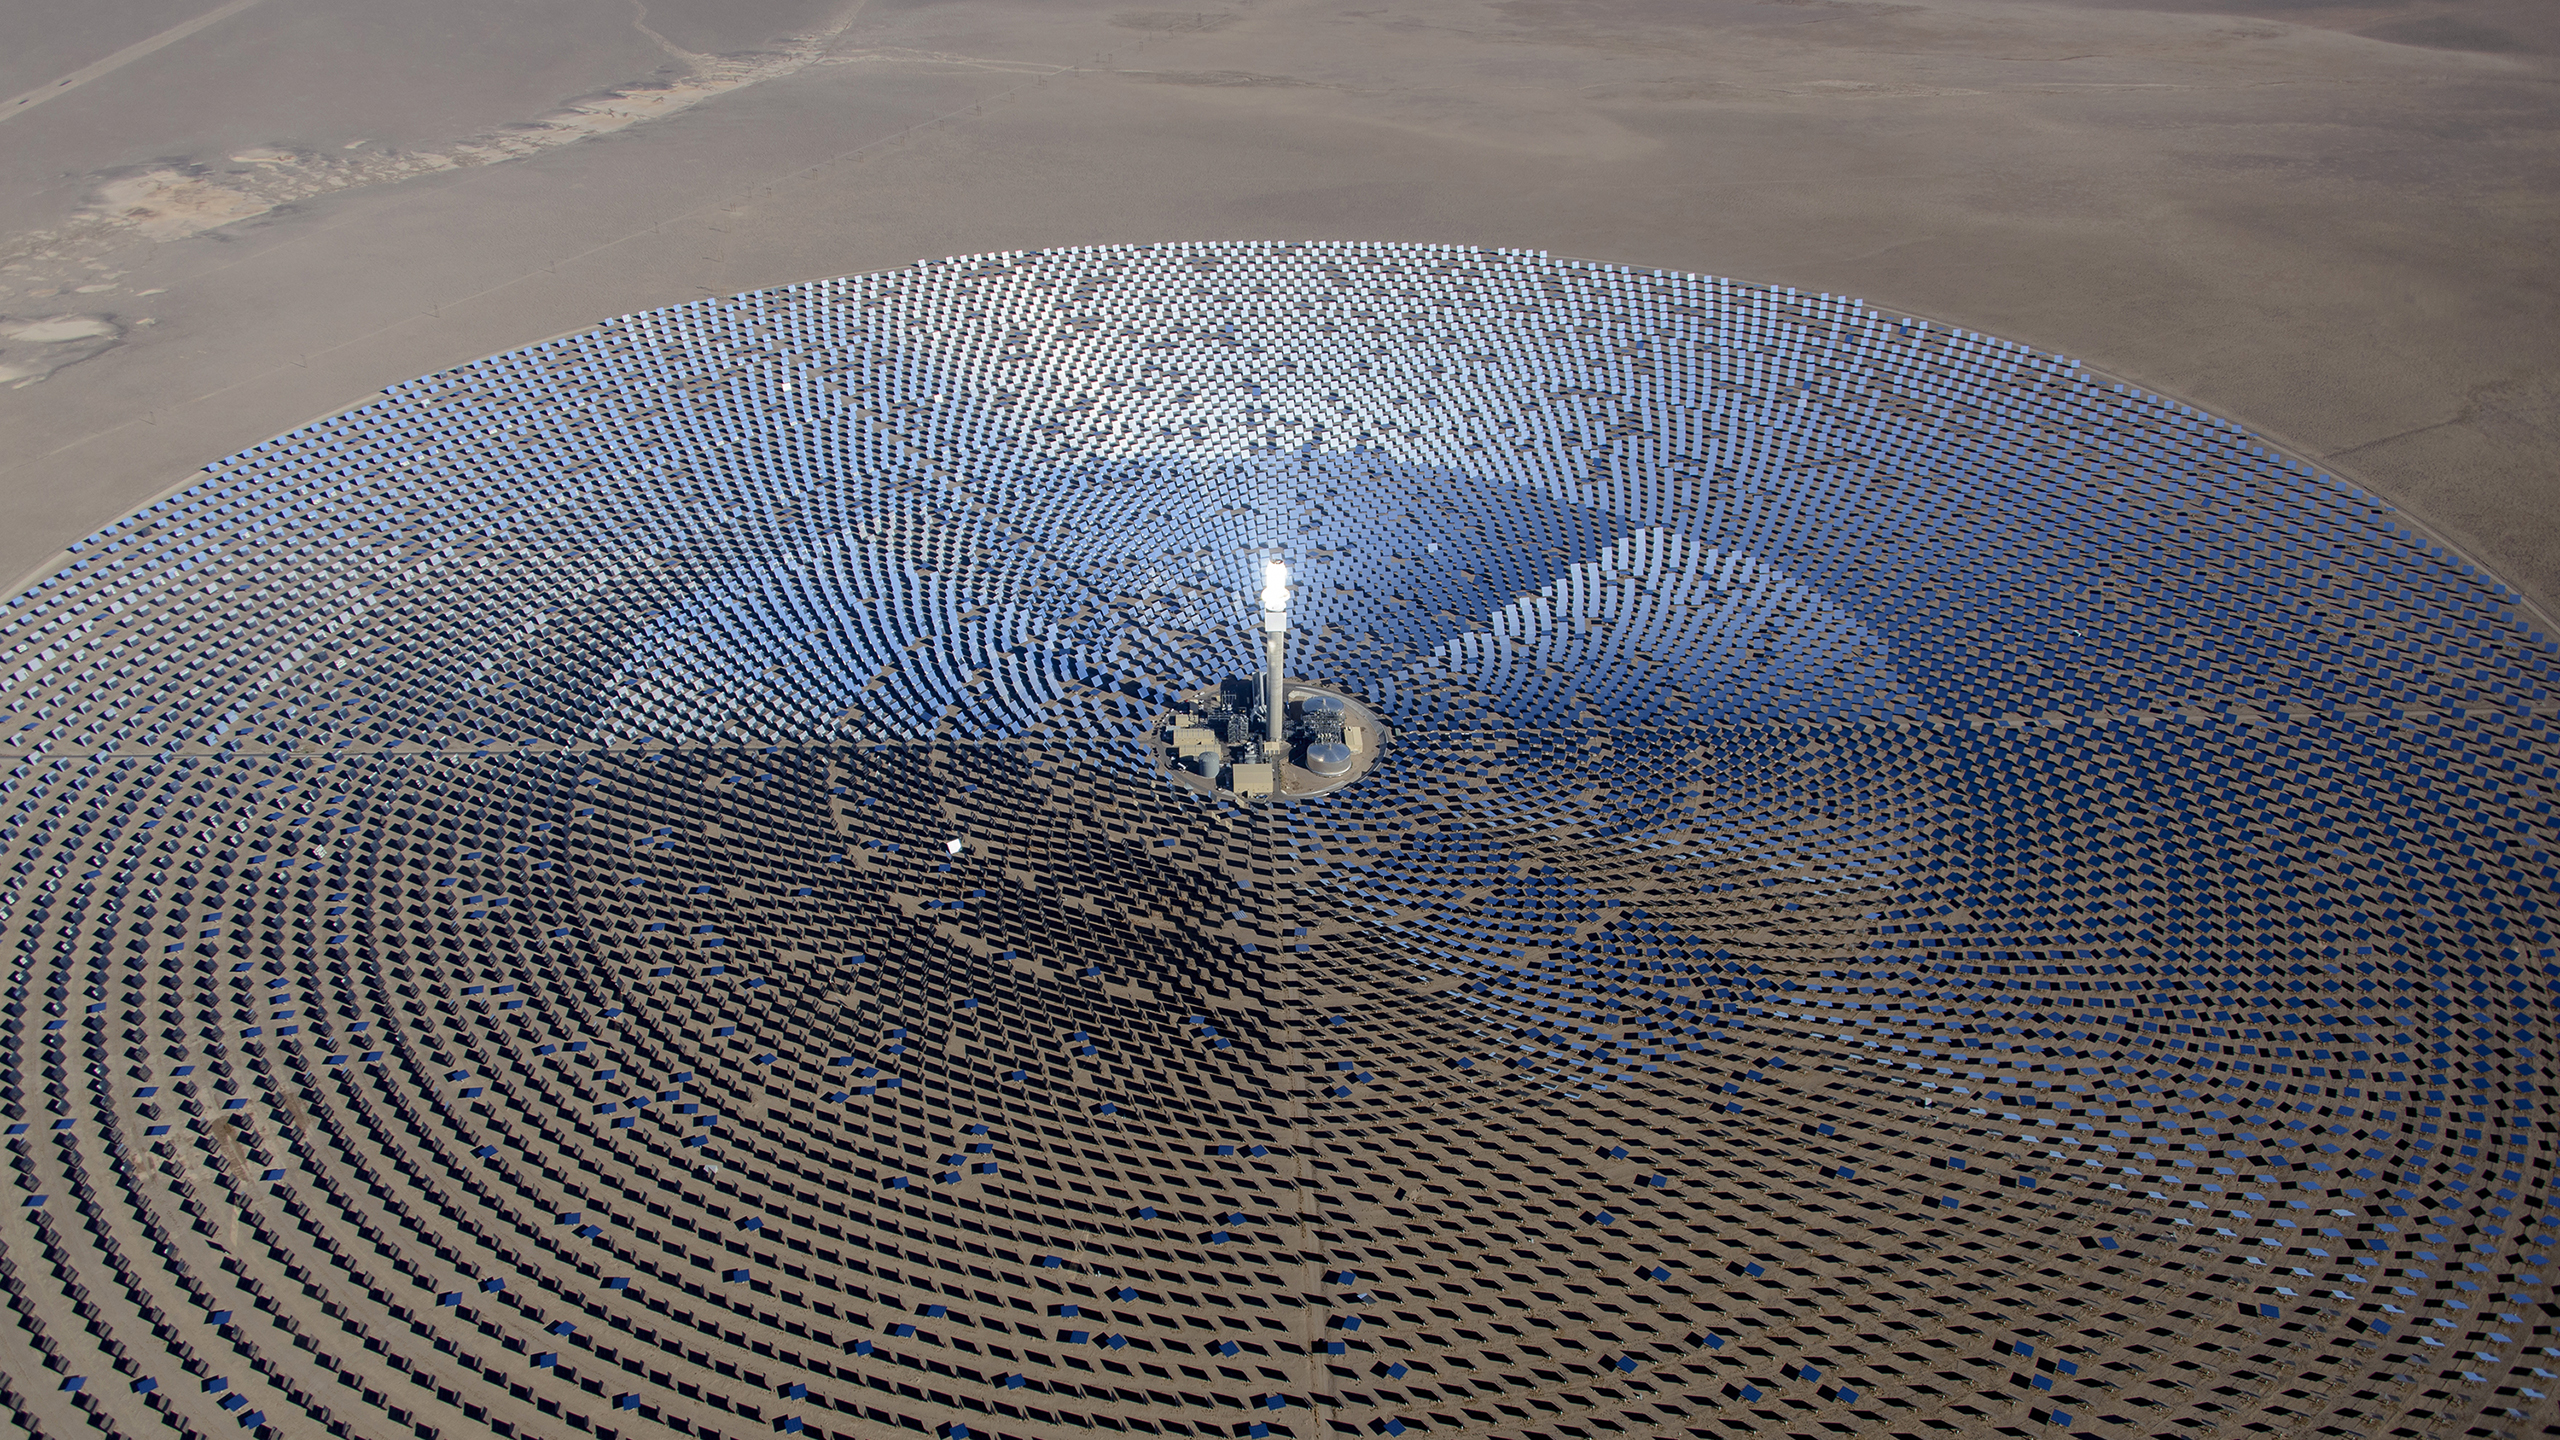 Solar Power Power Plant Technology Desert Aerial View 2560x1440